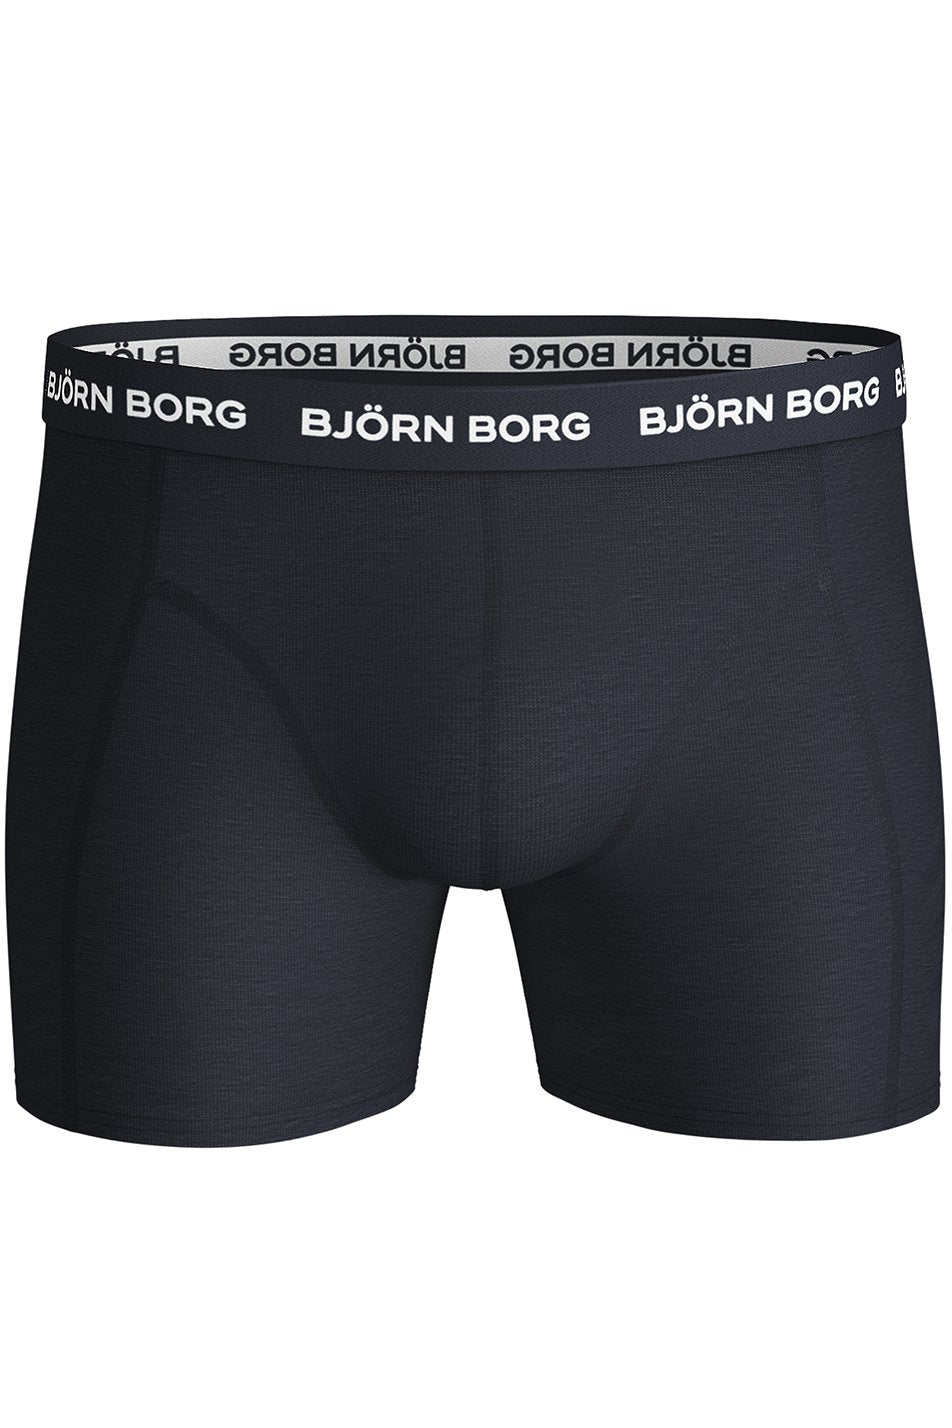 Björn Borg 5 Pack Solid Men's Boxer Brief